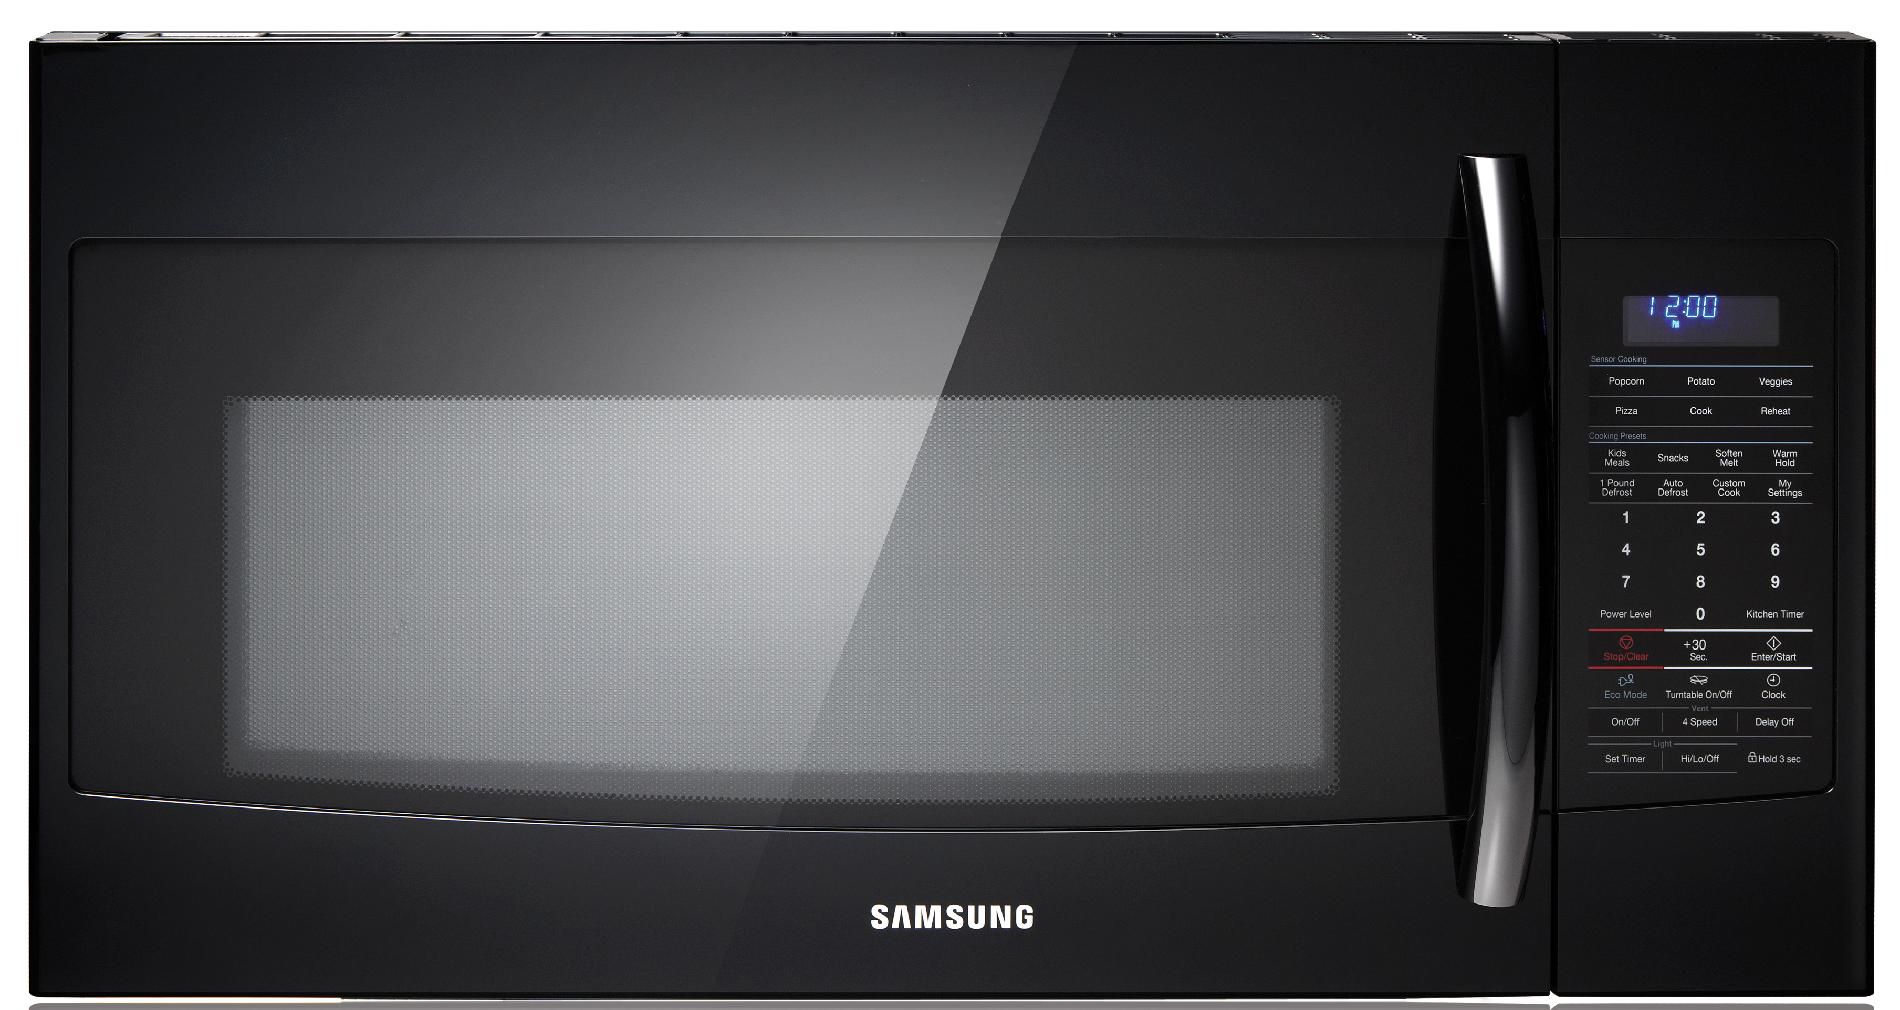 Samsung - SMH1927B/XAA - 1.9 cu. ft. Over-the-Range Microwave - Black